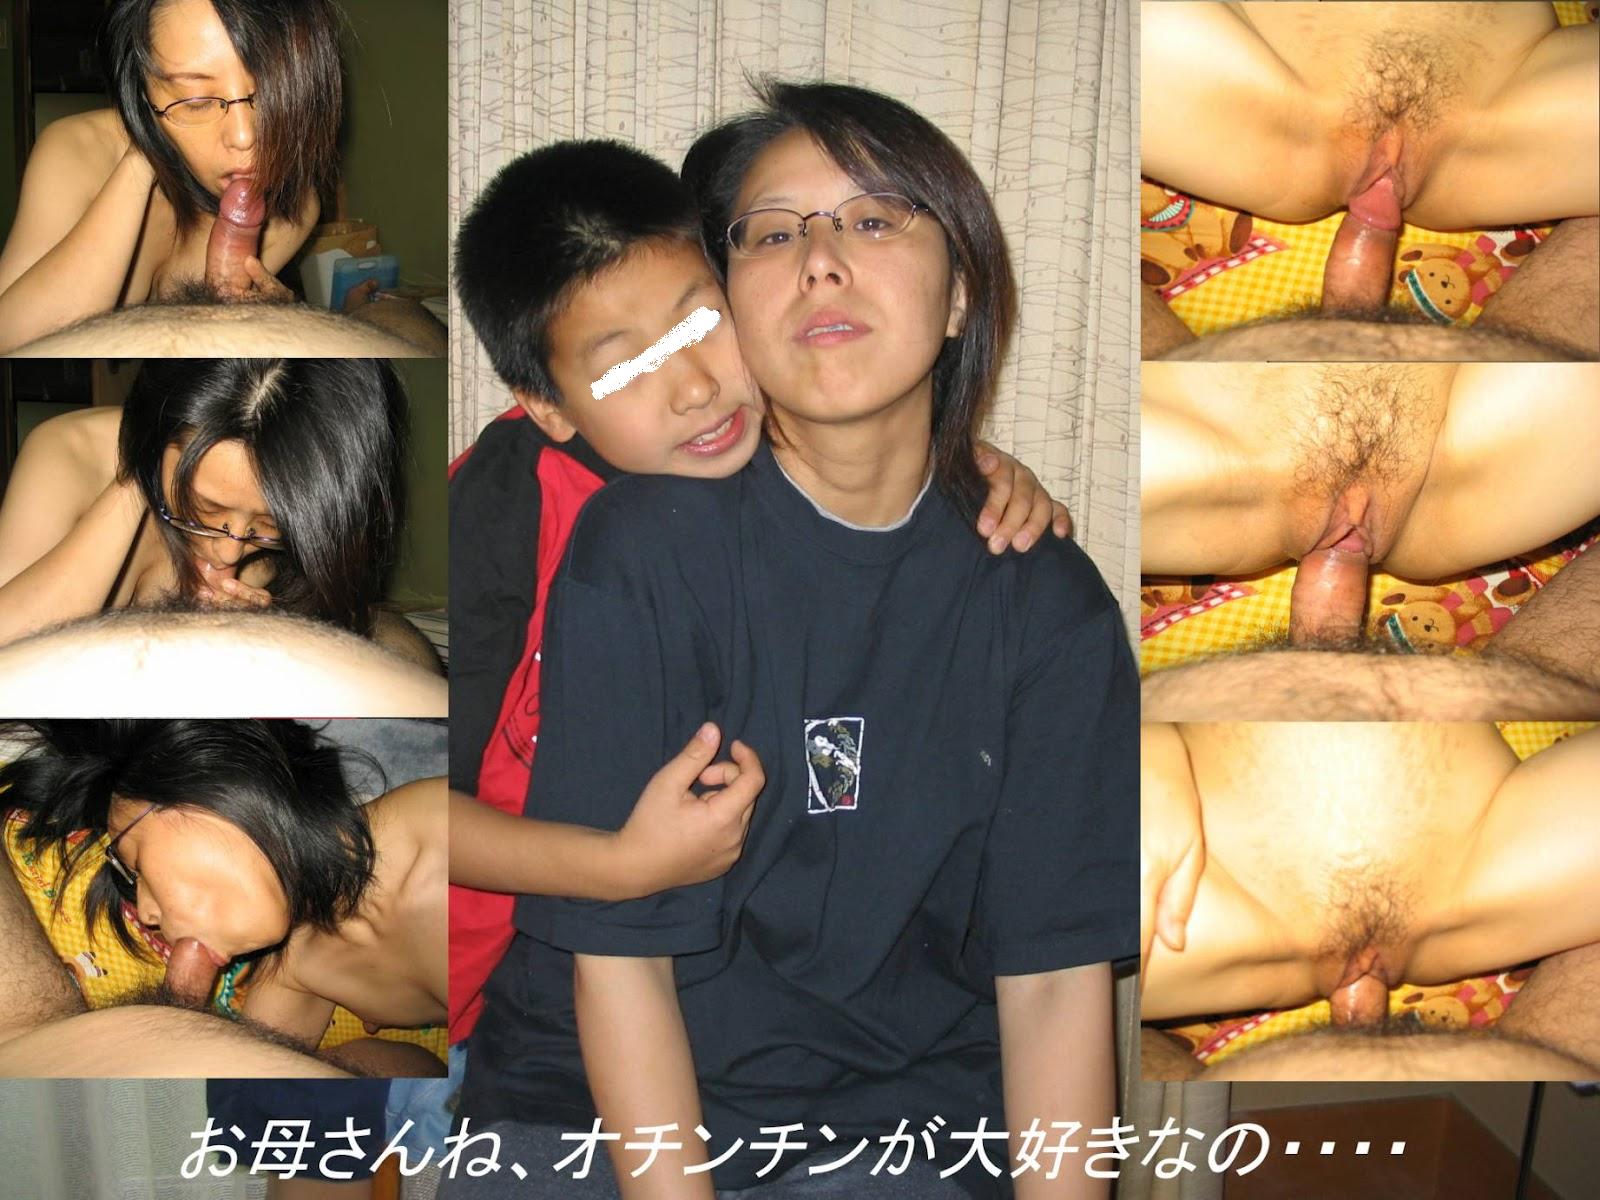 Japan Mom Sex Image 227353